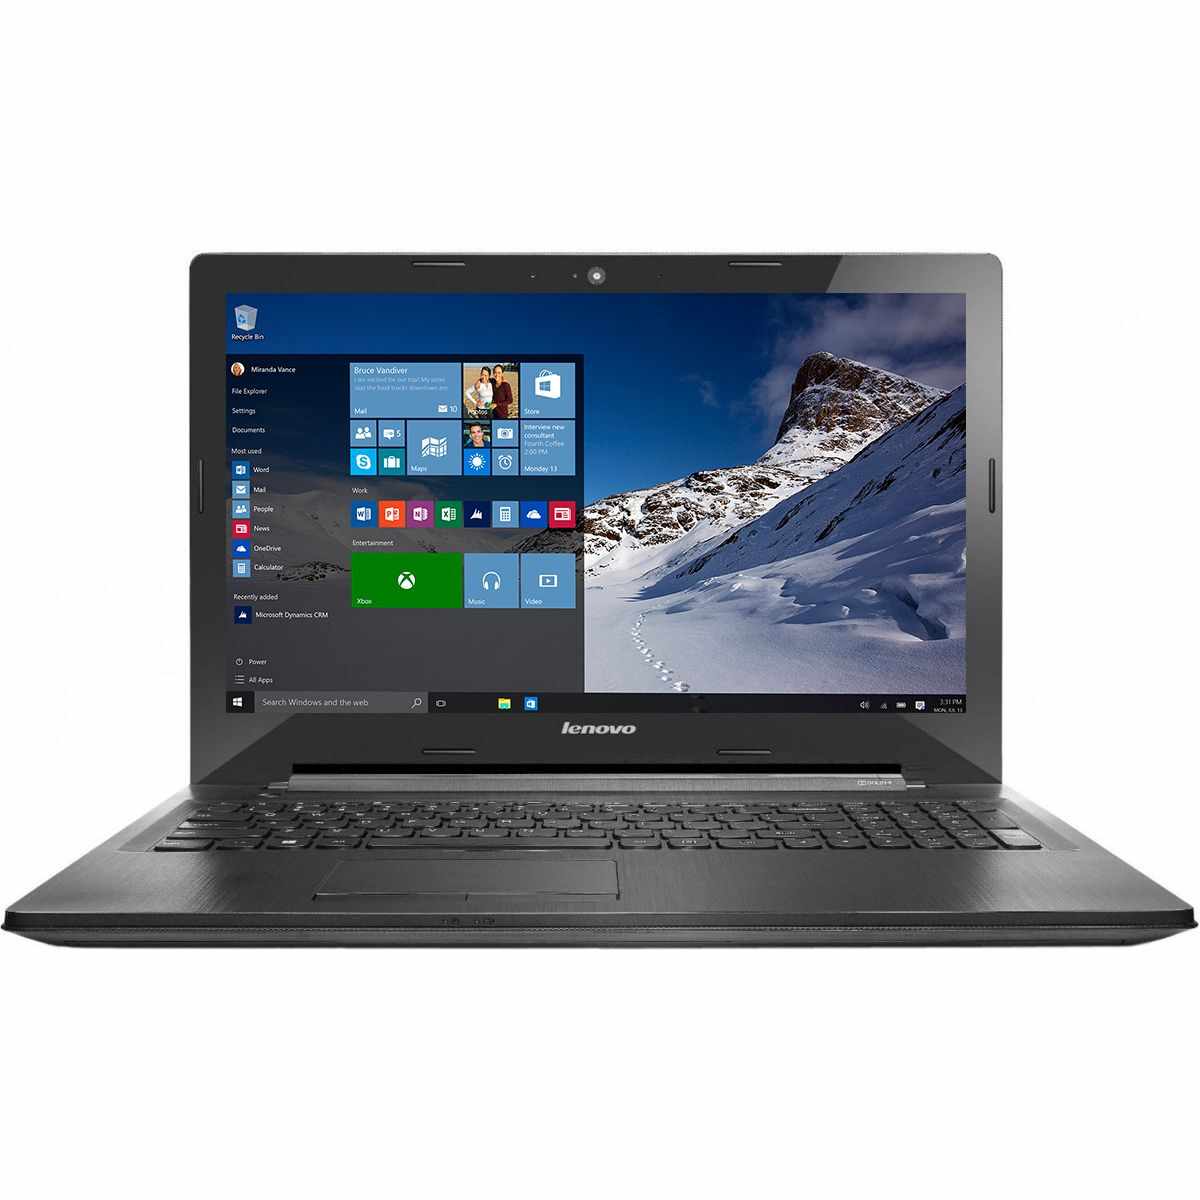 Laptop Lenovo IdeaPad G50-45, AMD A4-6210, 4GB DDR3, SSHD 500GB + 8GB, Intel HD Graphics, Windows 10